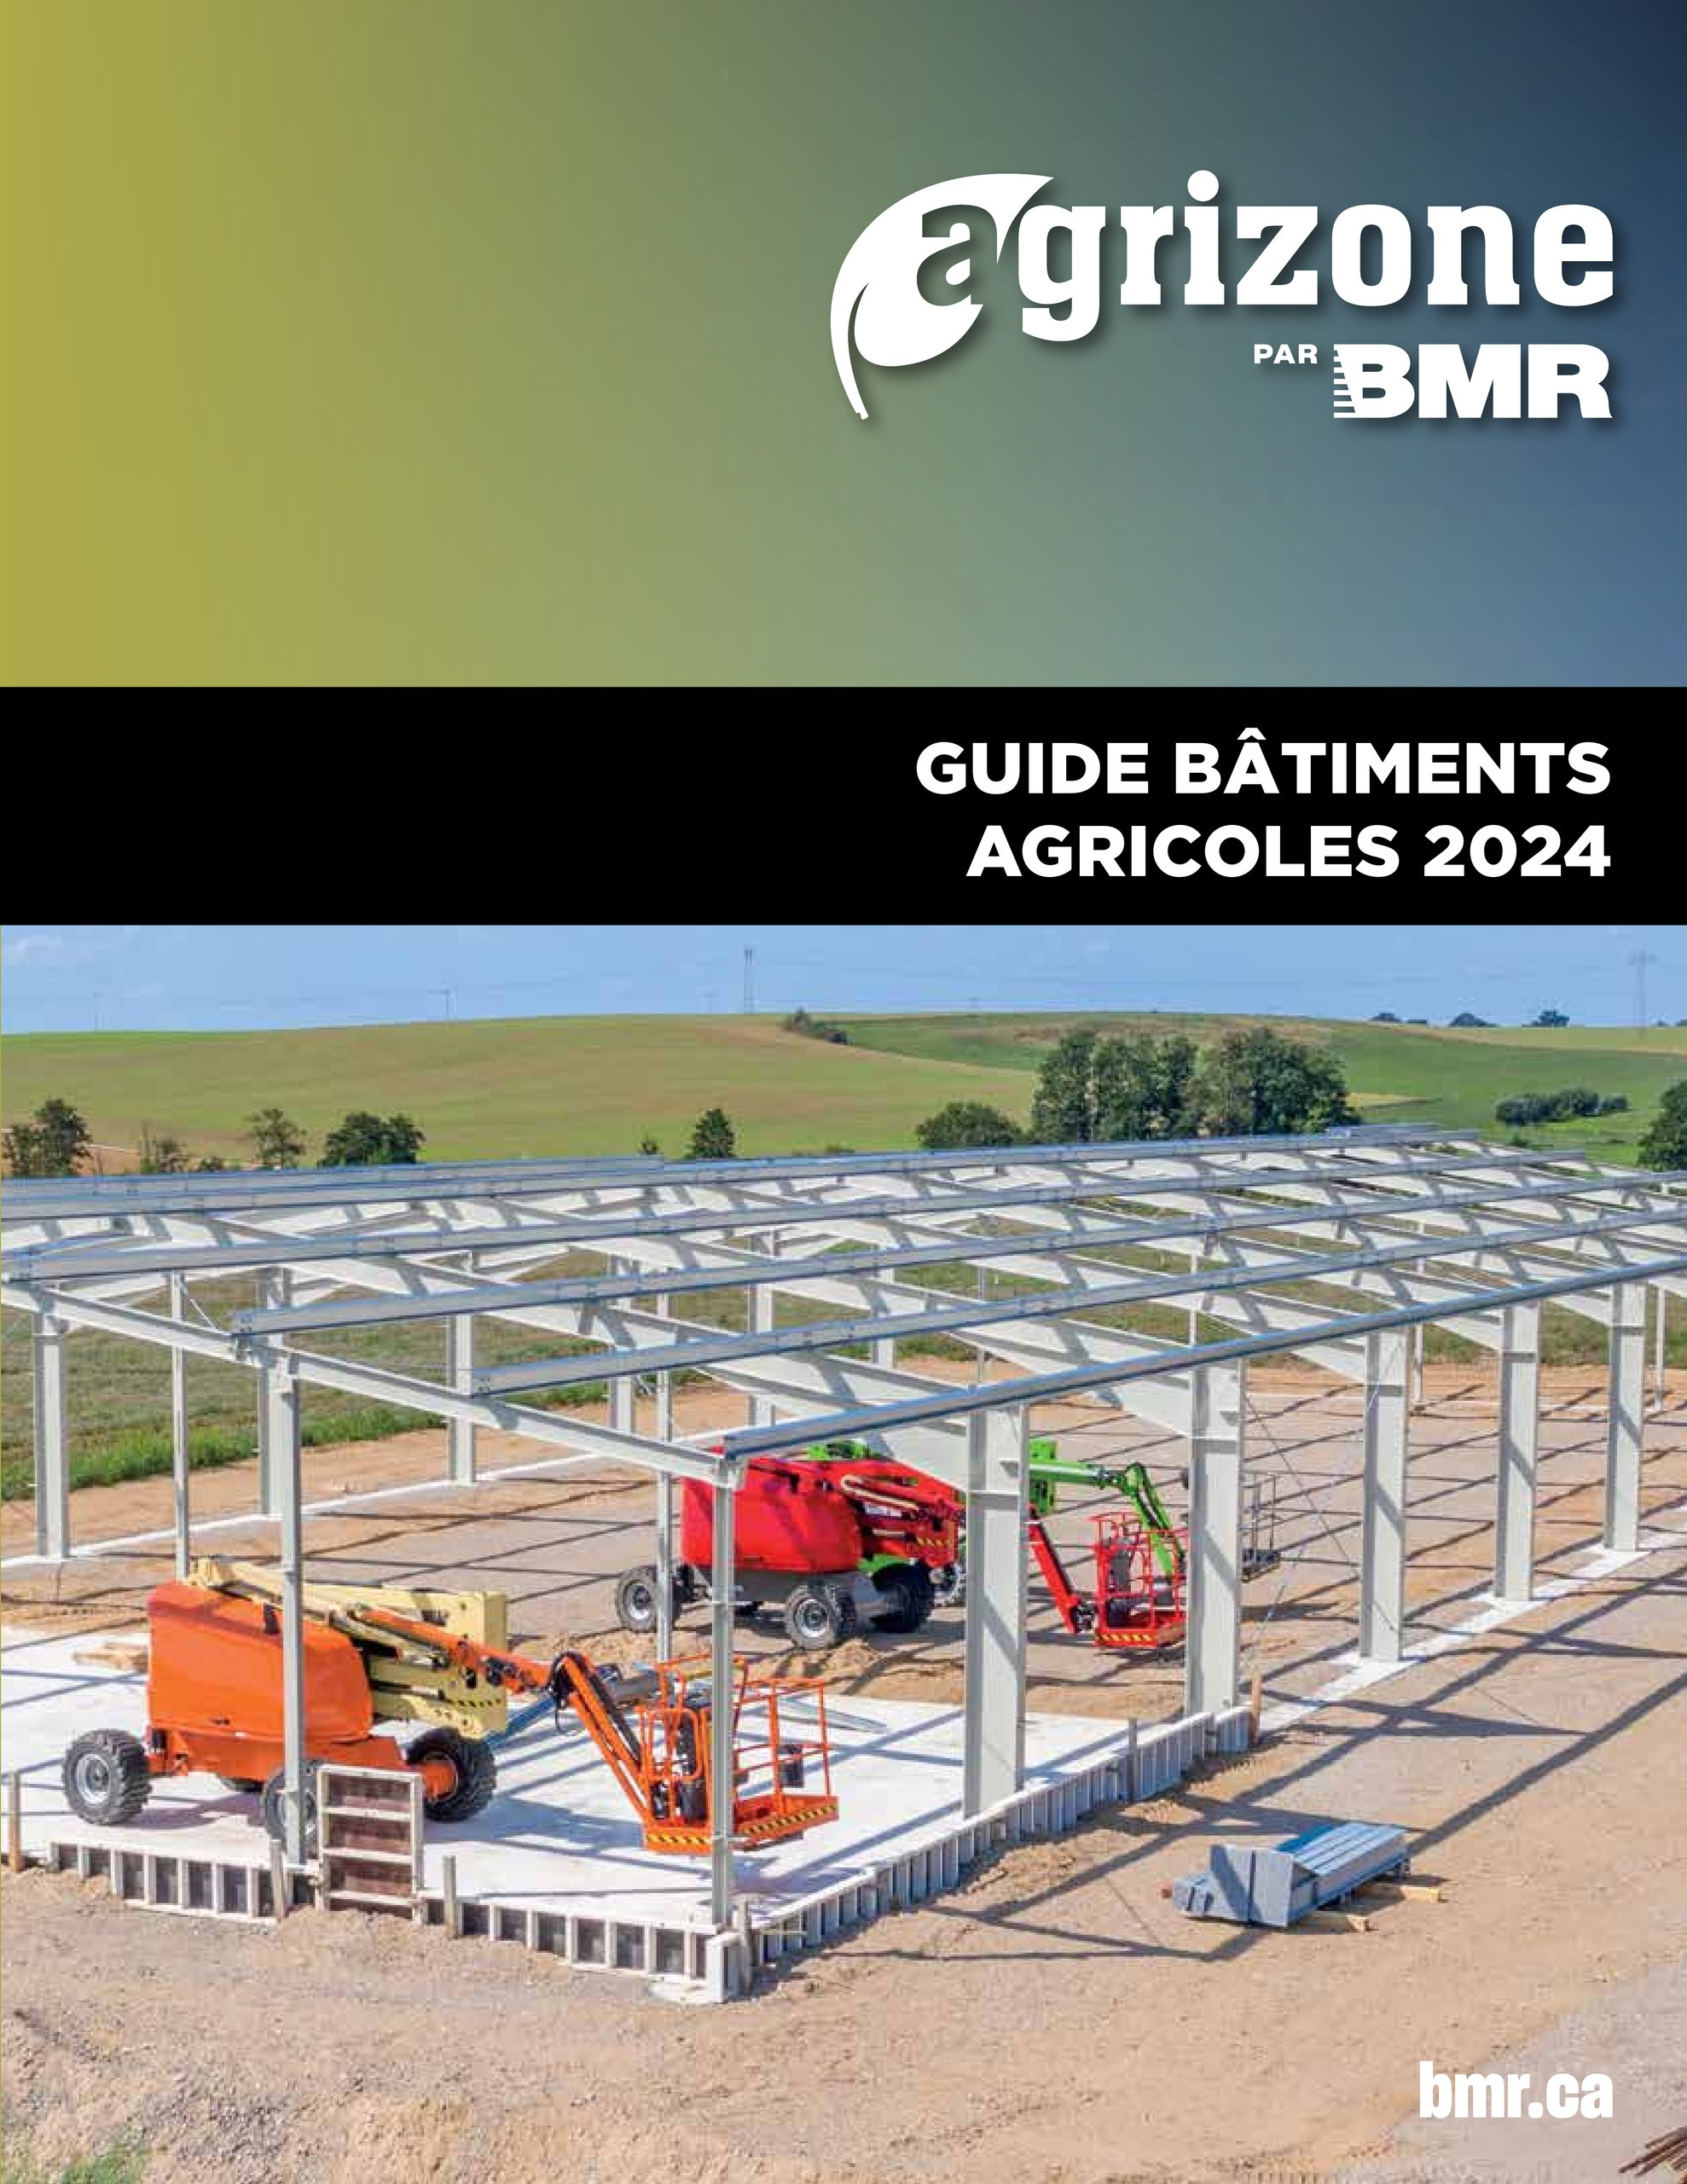 Circulaire BMR - Guide Bâtiments Agricoles 2024 - Page 1